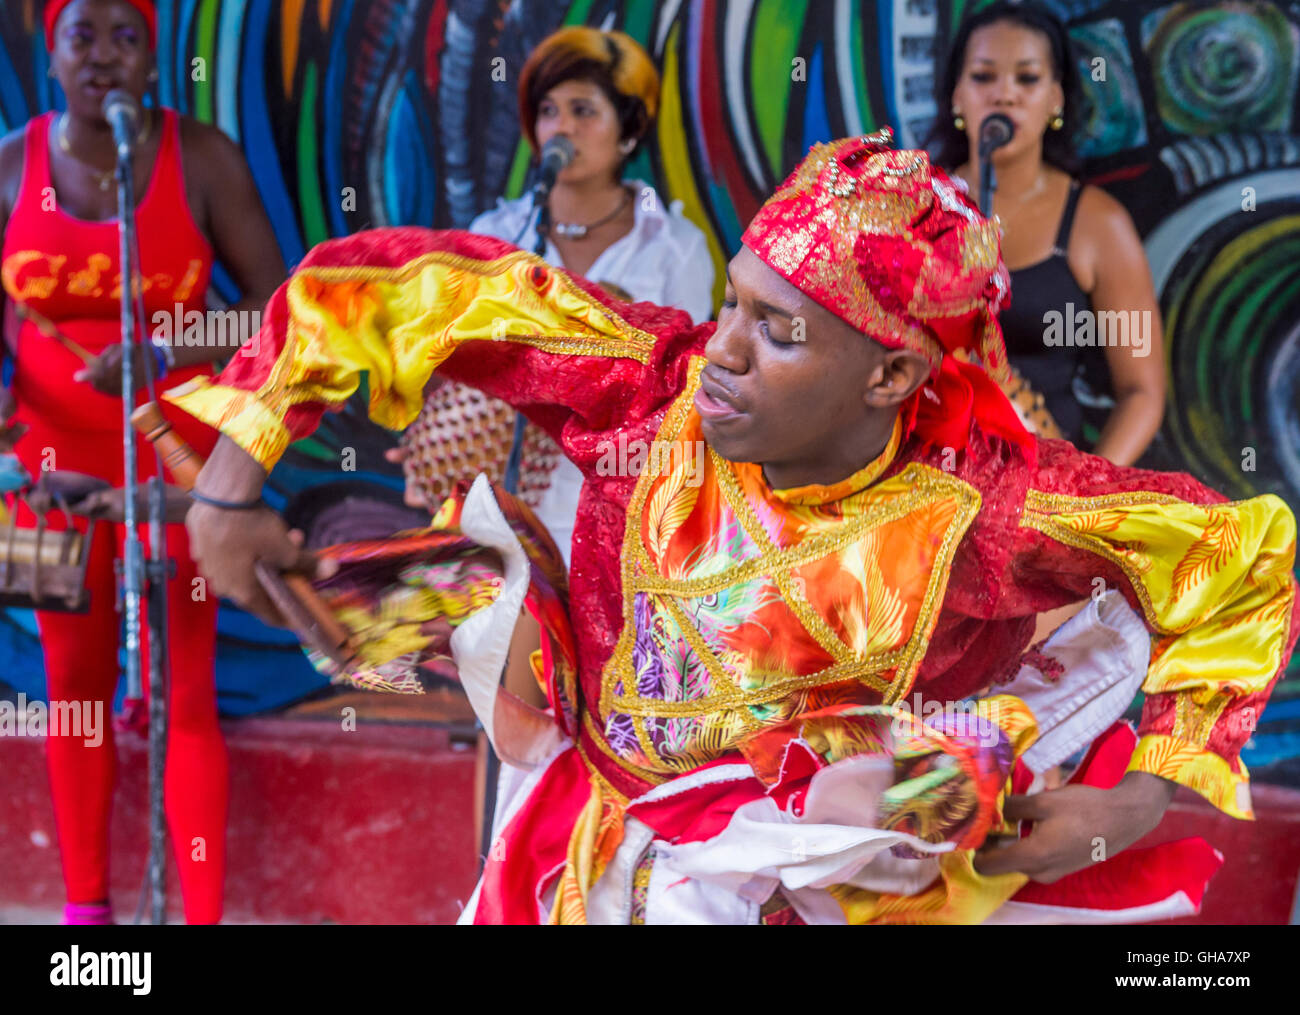 Rumba dancers in Havana Cuba Stock Photo - Alamy